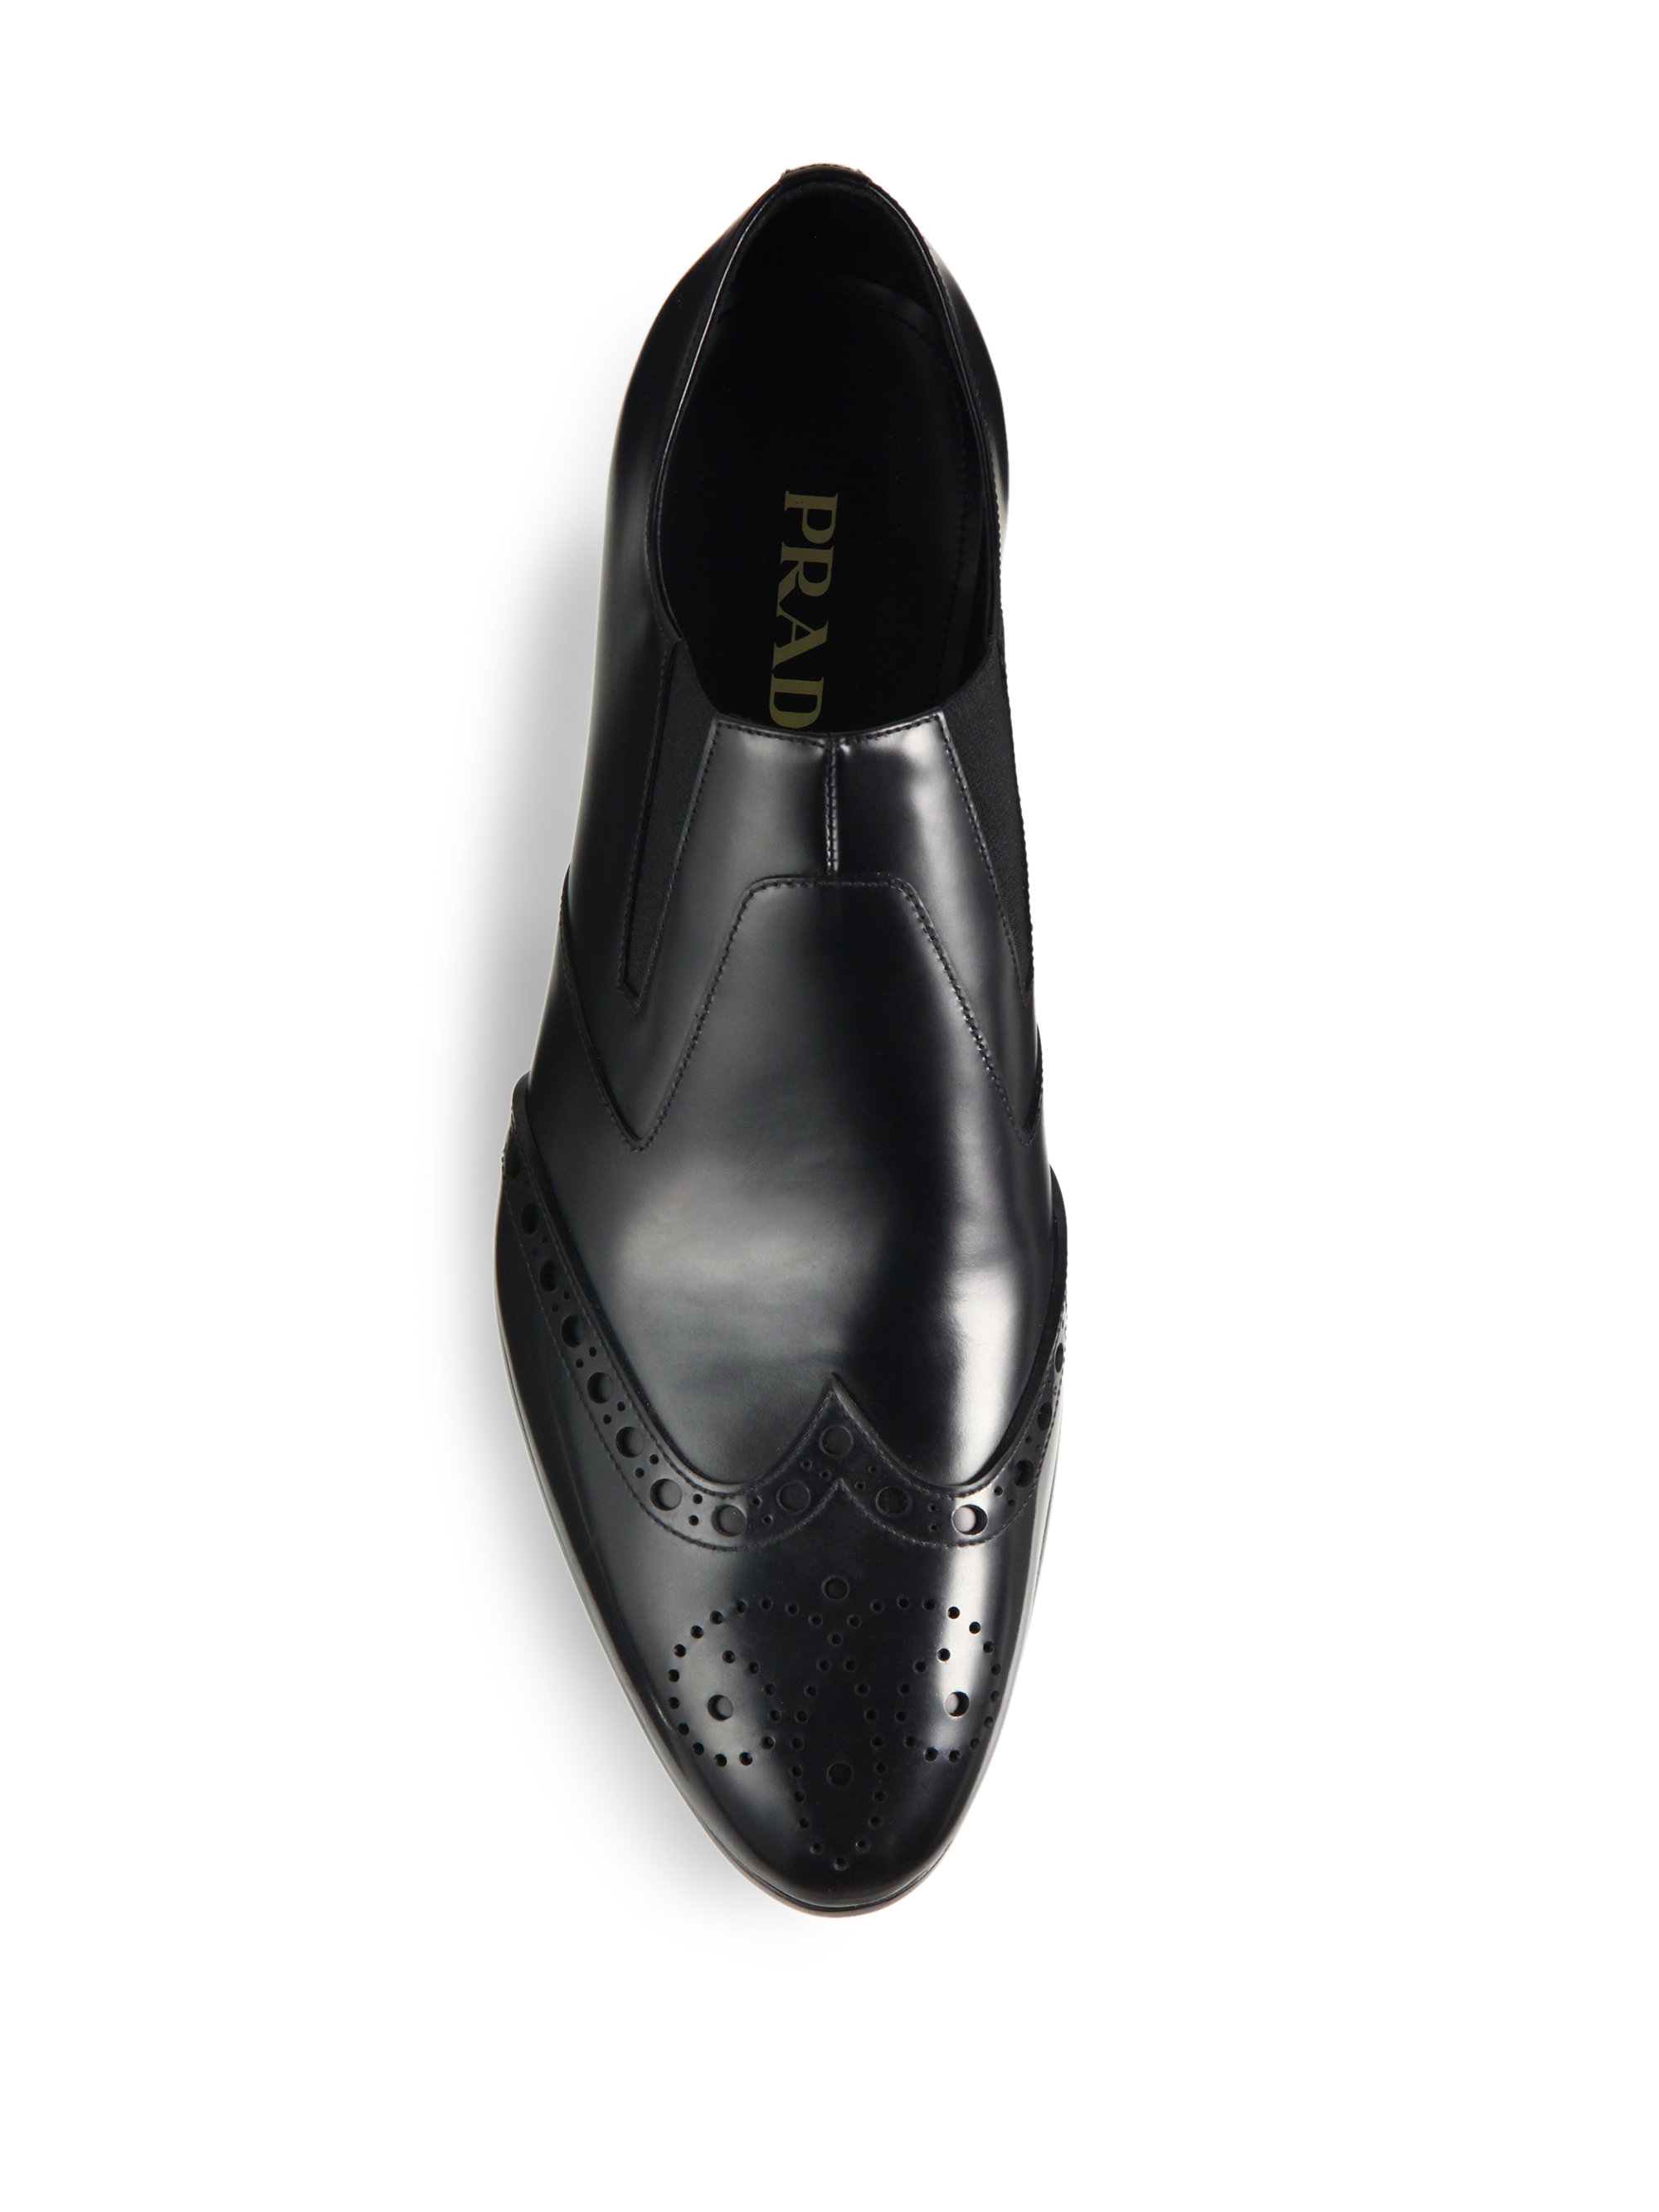 Prada Spazzolato Rois Slip-on Leather Penny Loafers in Black for Men - Lyst